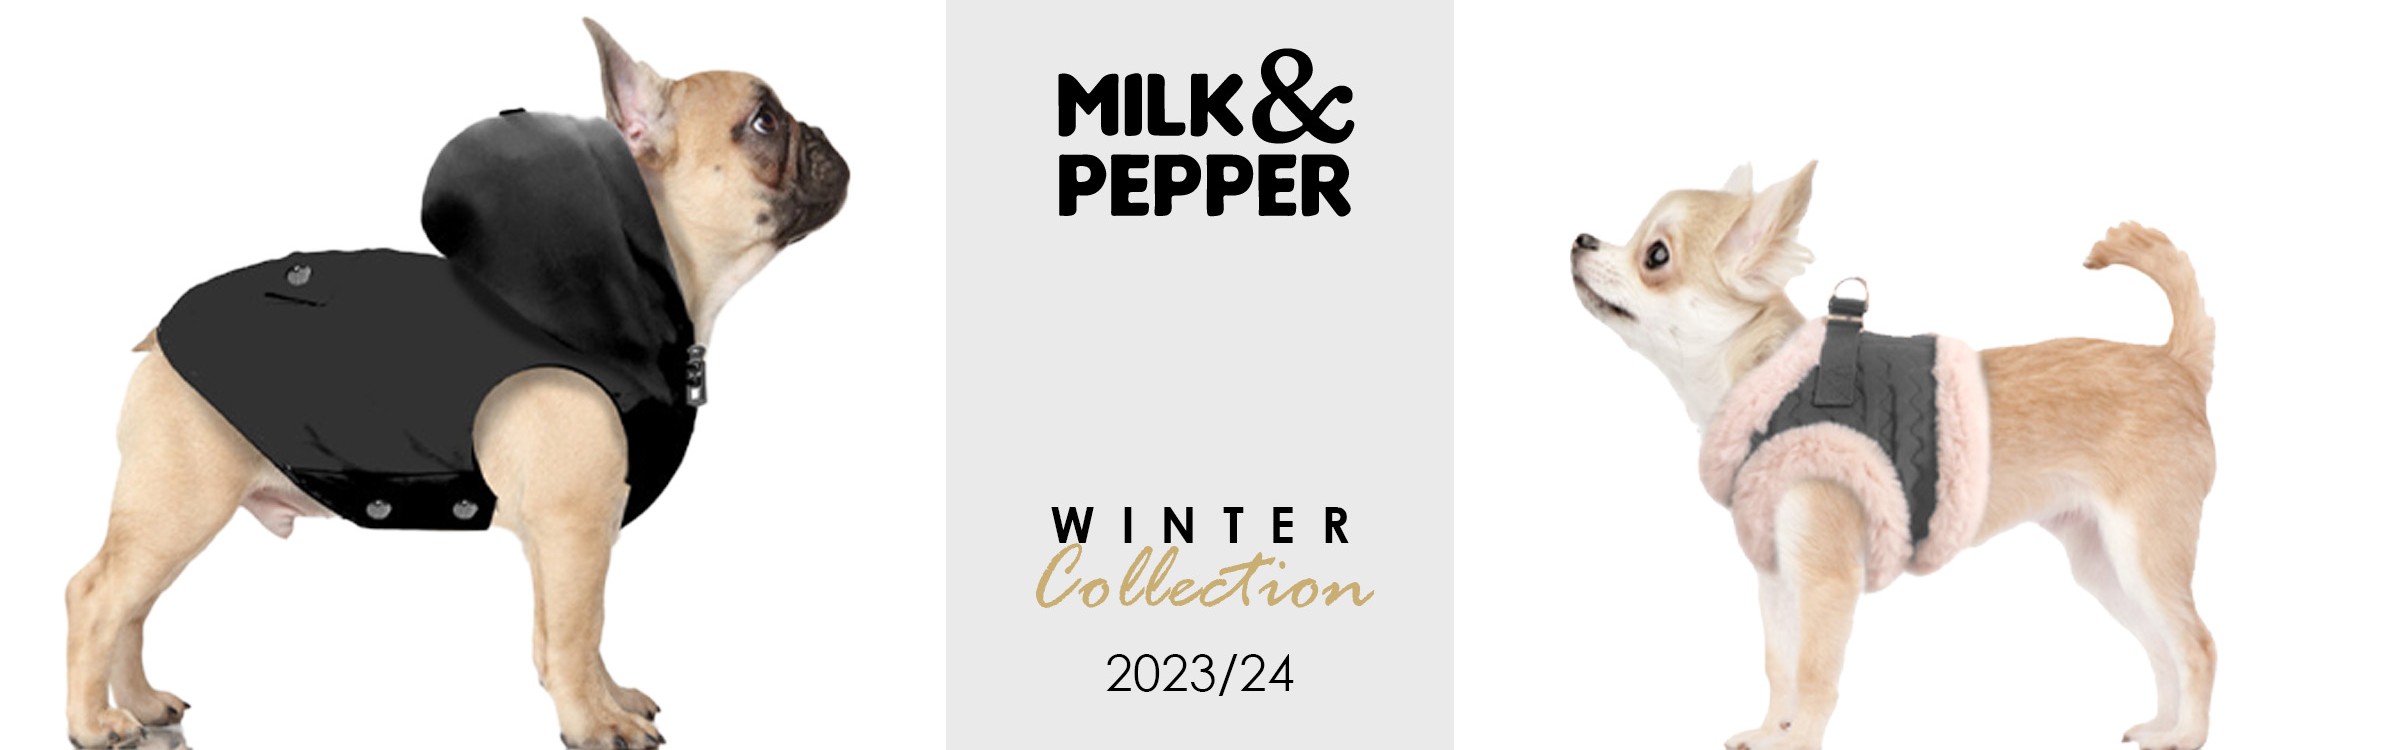 Milk & Pepper Dog Fashion Accessories